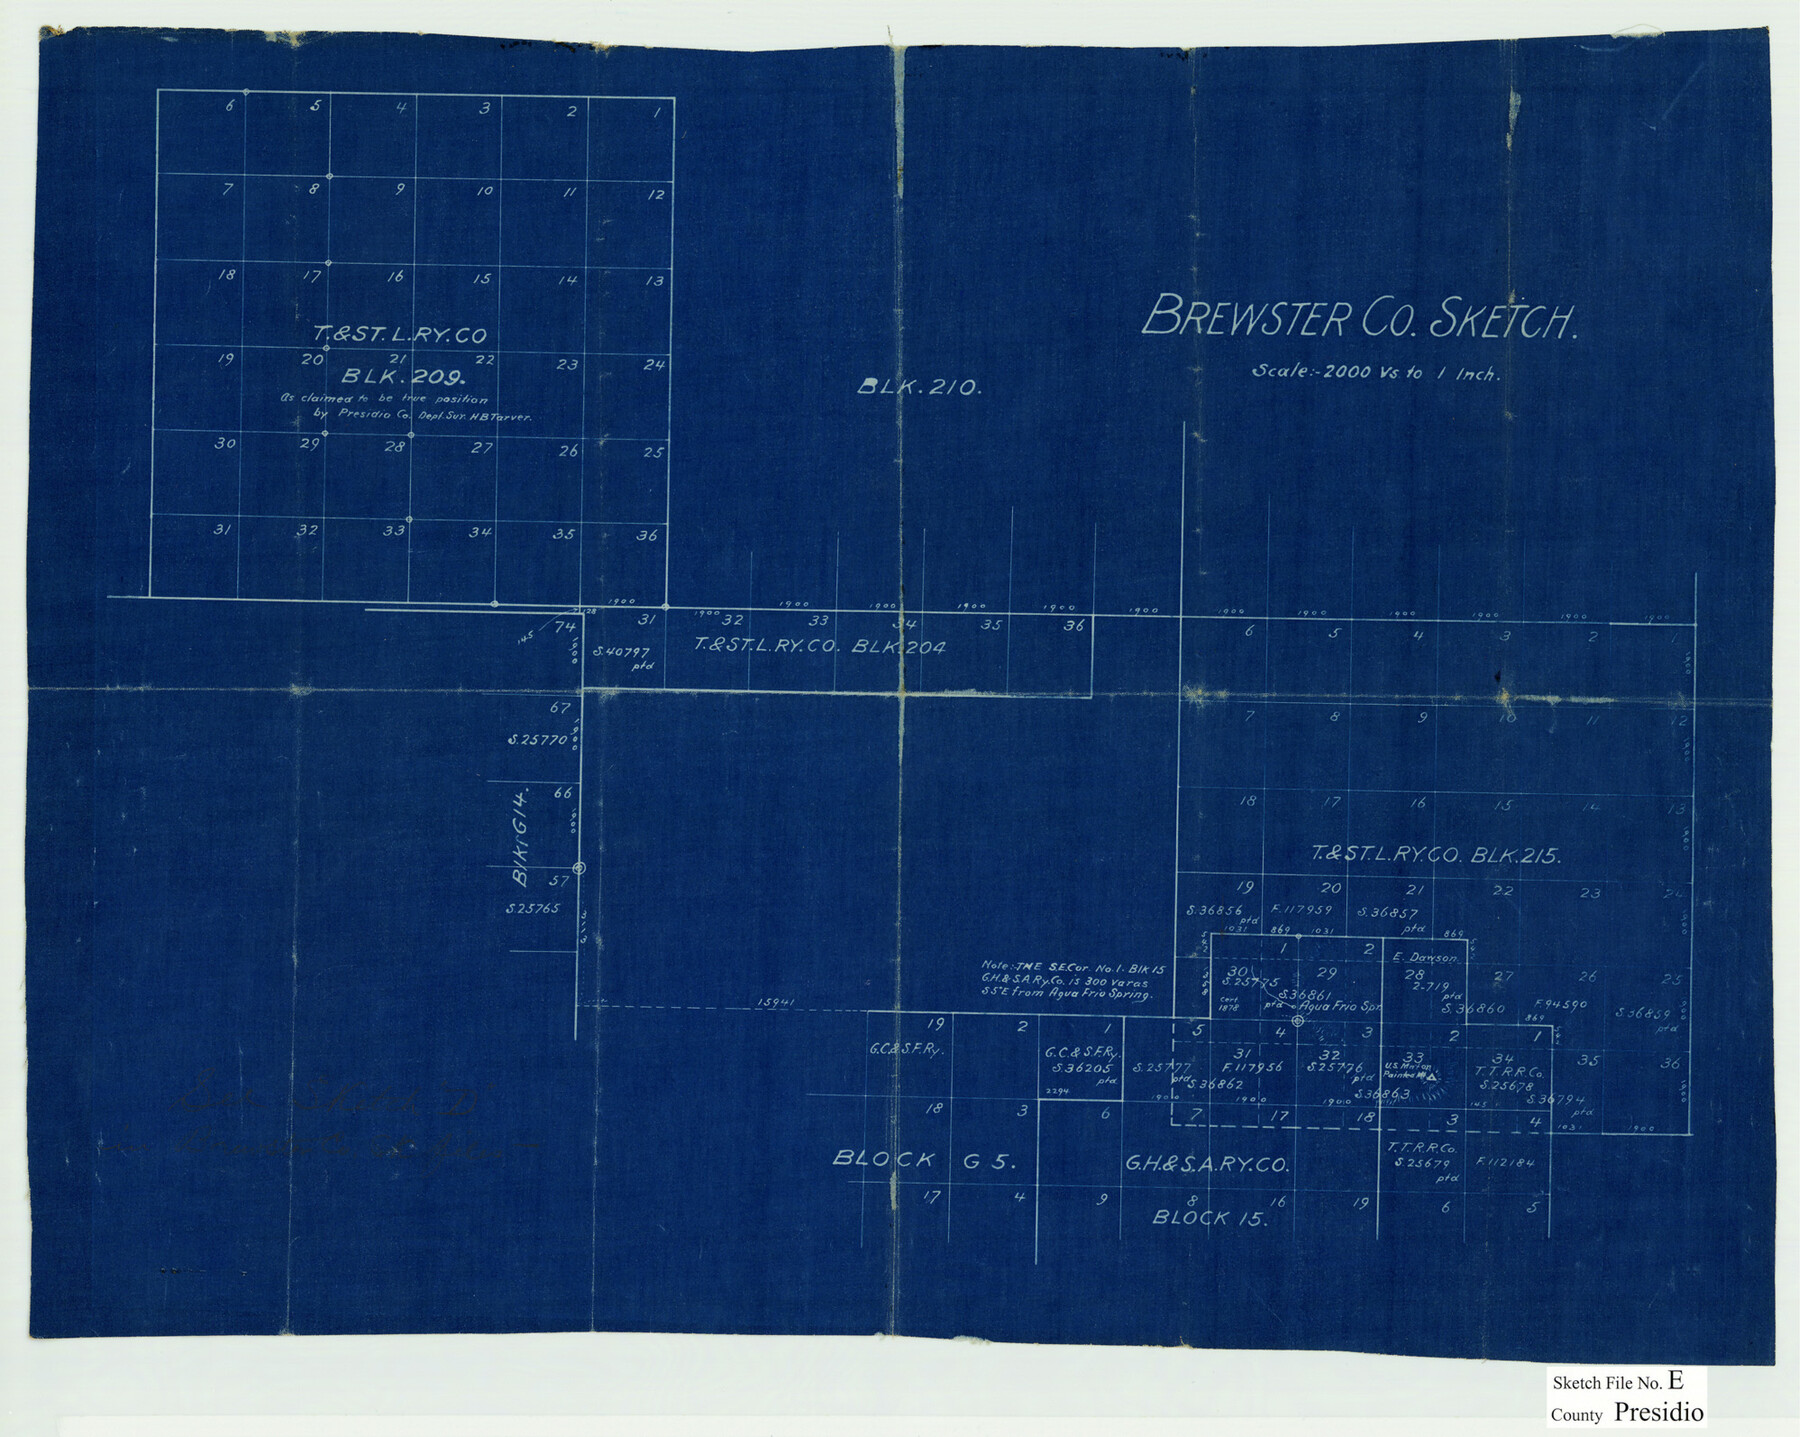 11702, Presidio County Sketch File E, General Map Collection